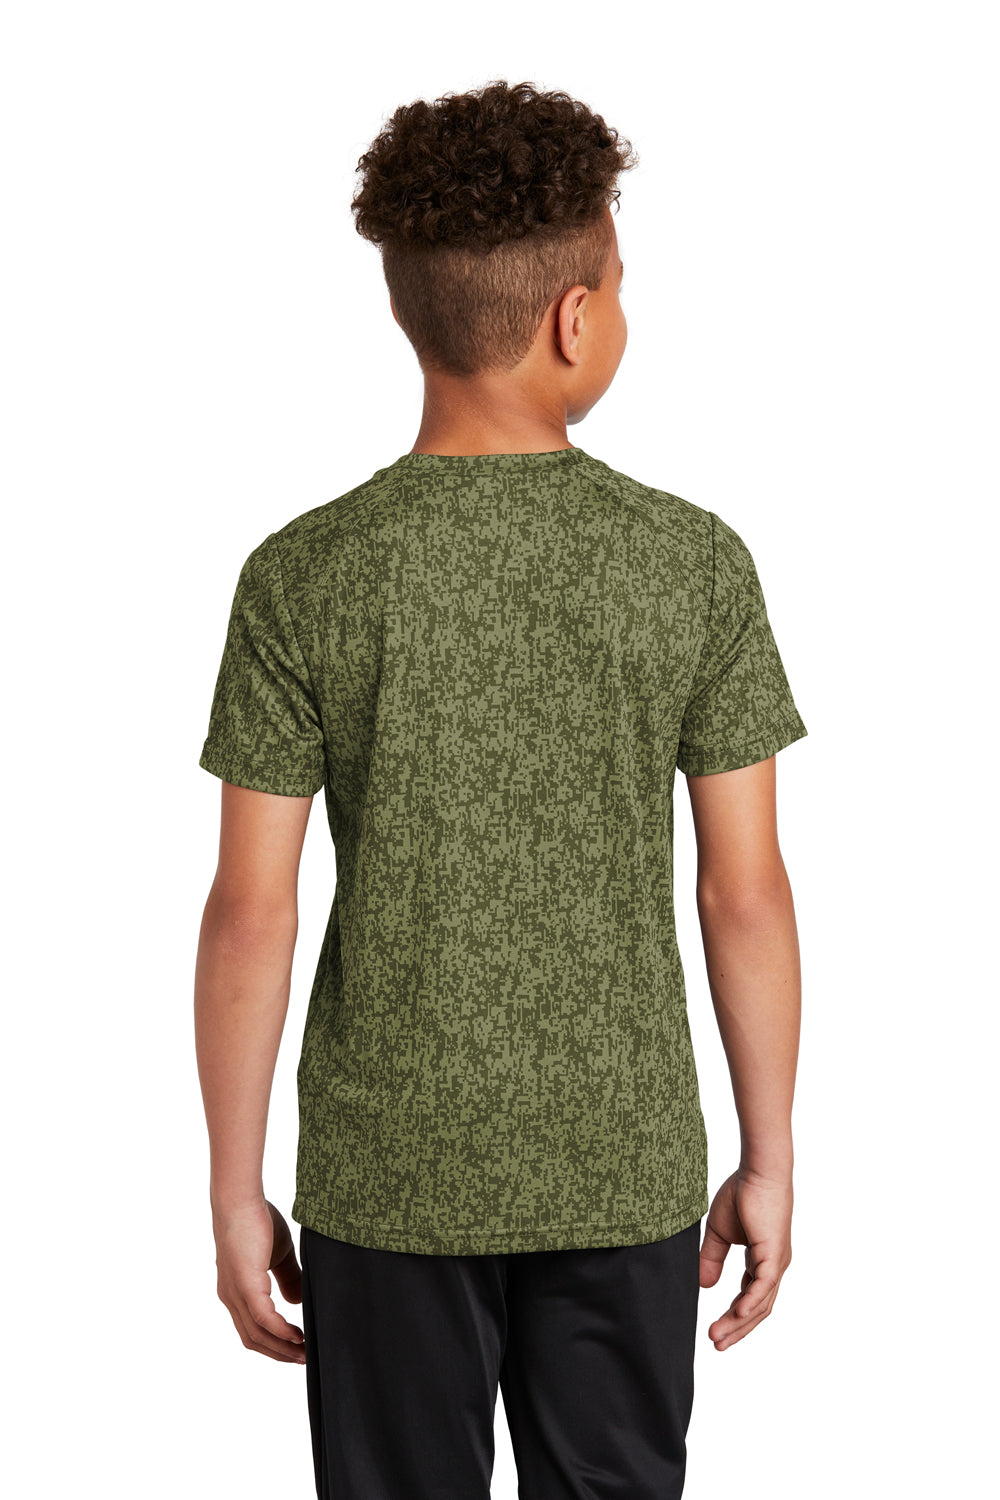 Sport-Tek Youth Digi Camo Short Sleeve Crewneck T-Shirt Olive Drab Green Side